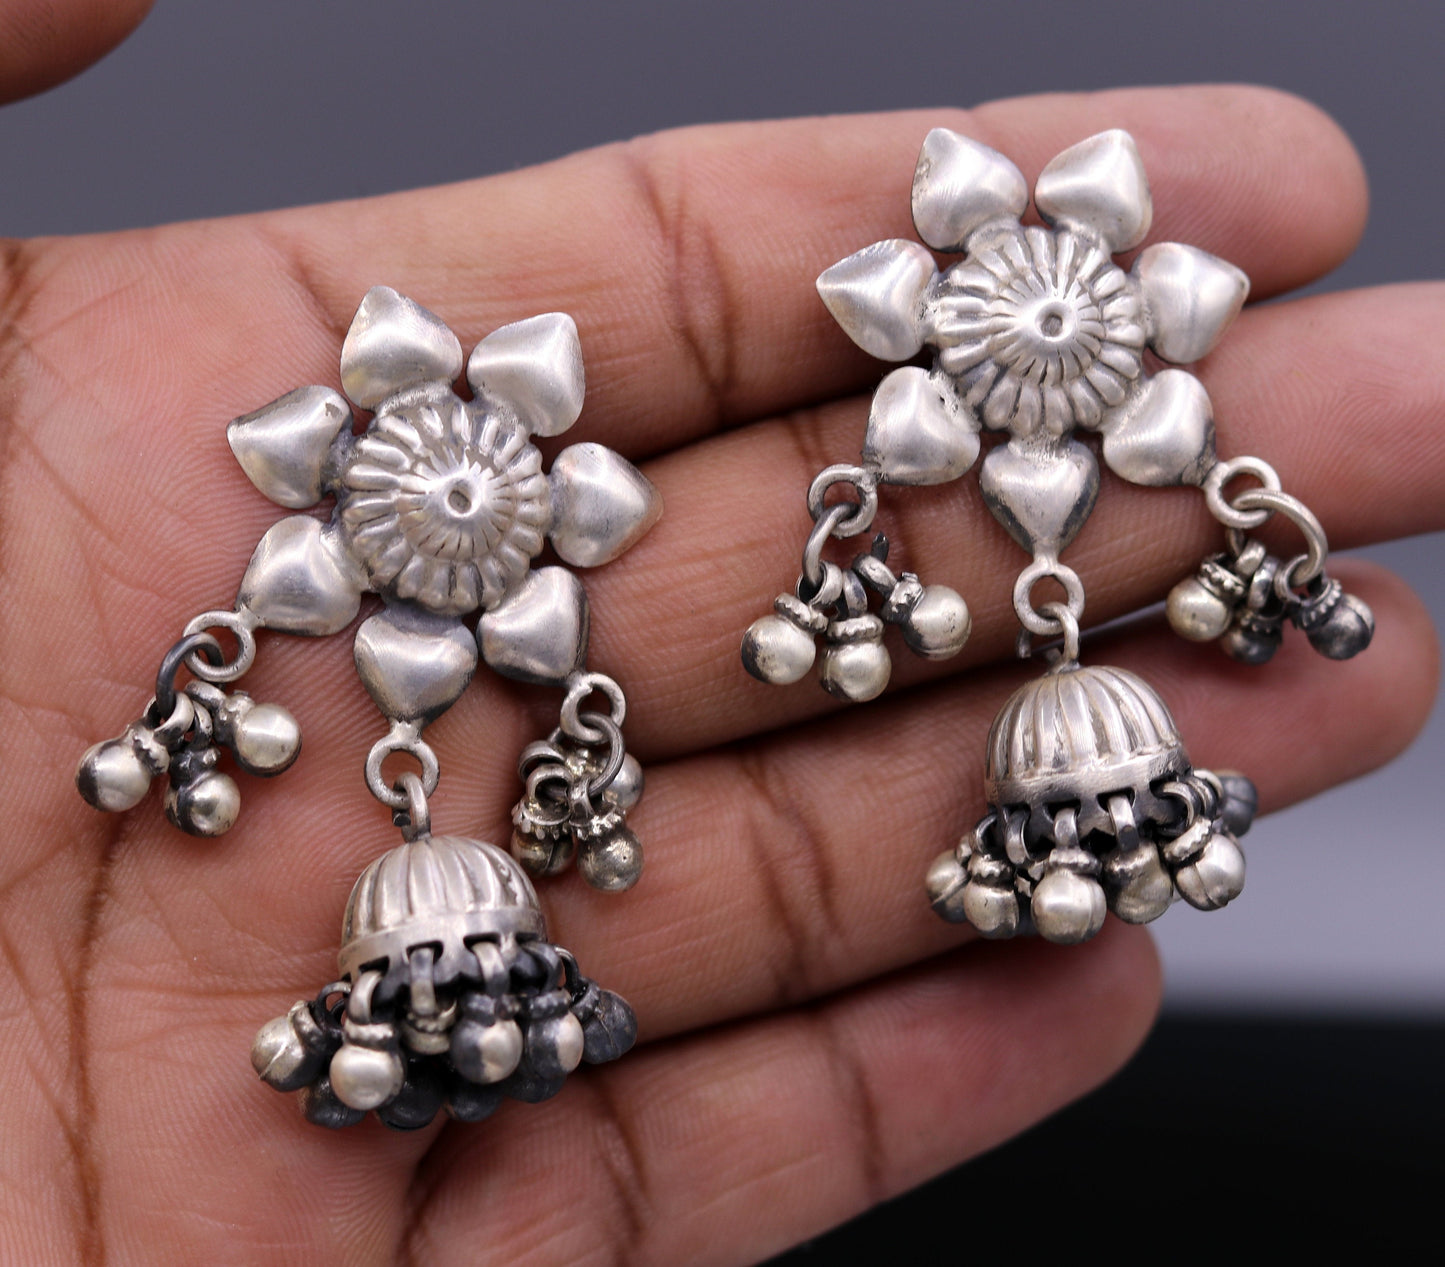 925 Sterling silver handmade vintage flower design stud earrings tribal belly dance chandelier earrings gifting jewelry from india s557 - TRIBAL ORNAMENTS